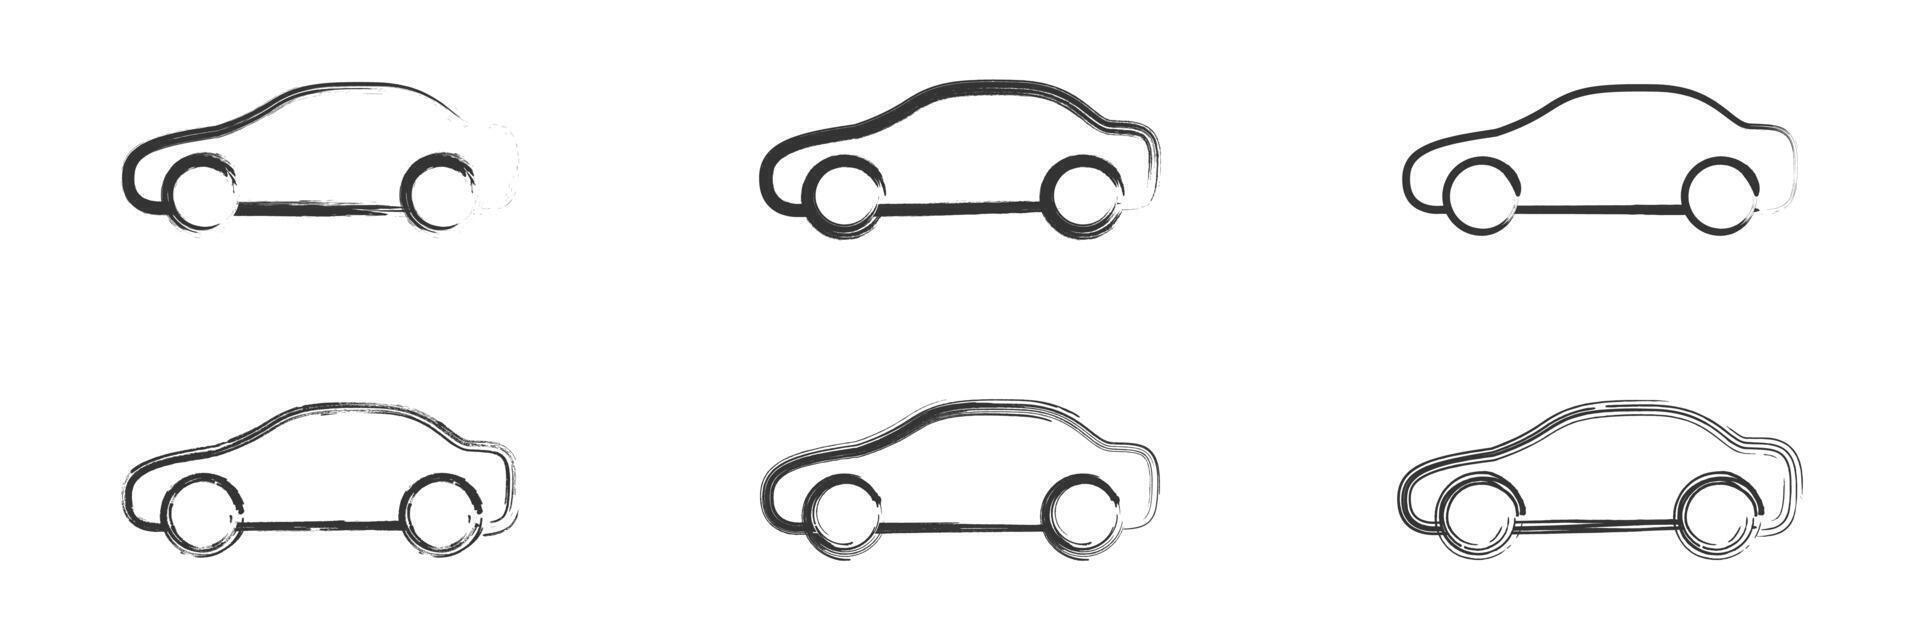 Hand drawn linear car icon set. Vector illustration.